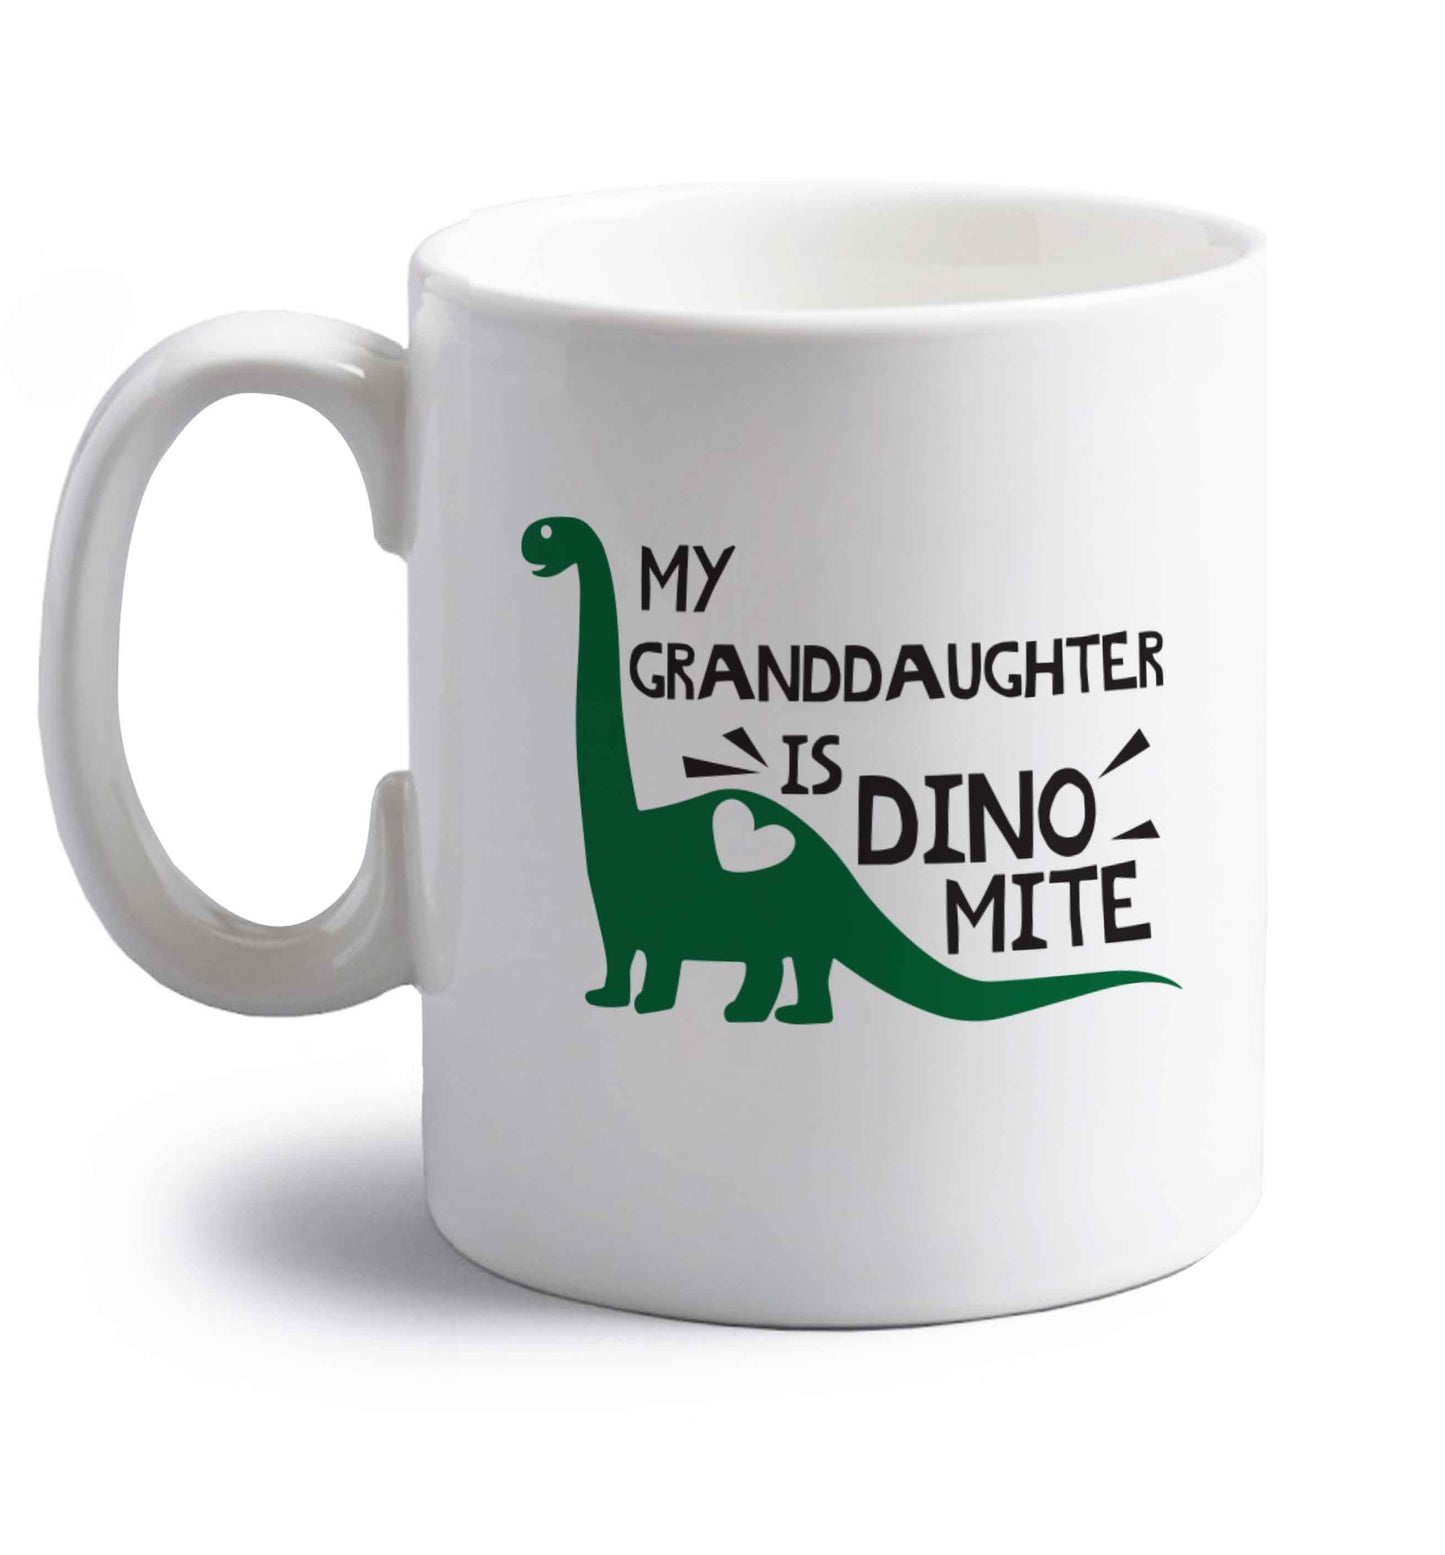 My granddaughter is dinomite! right handed white ceramic mug 